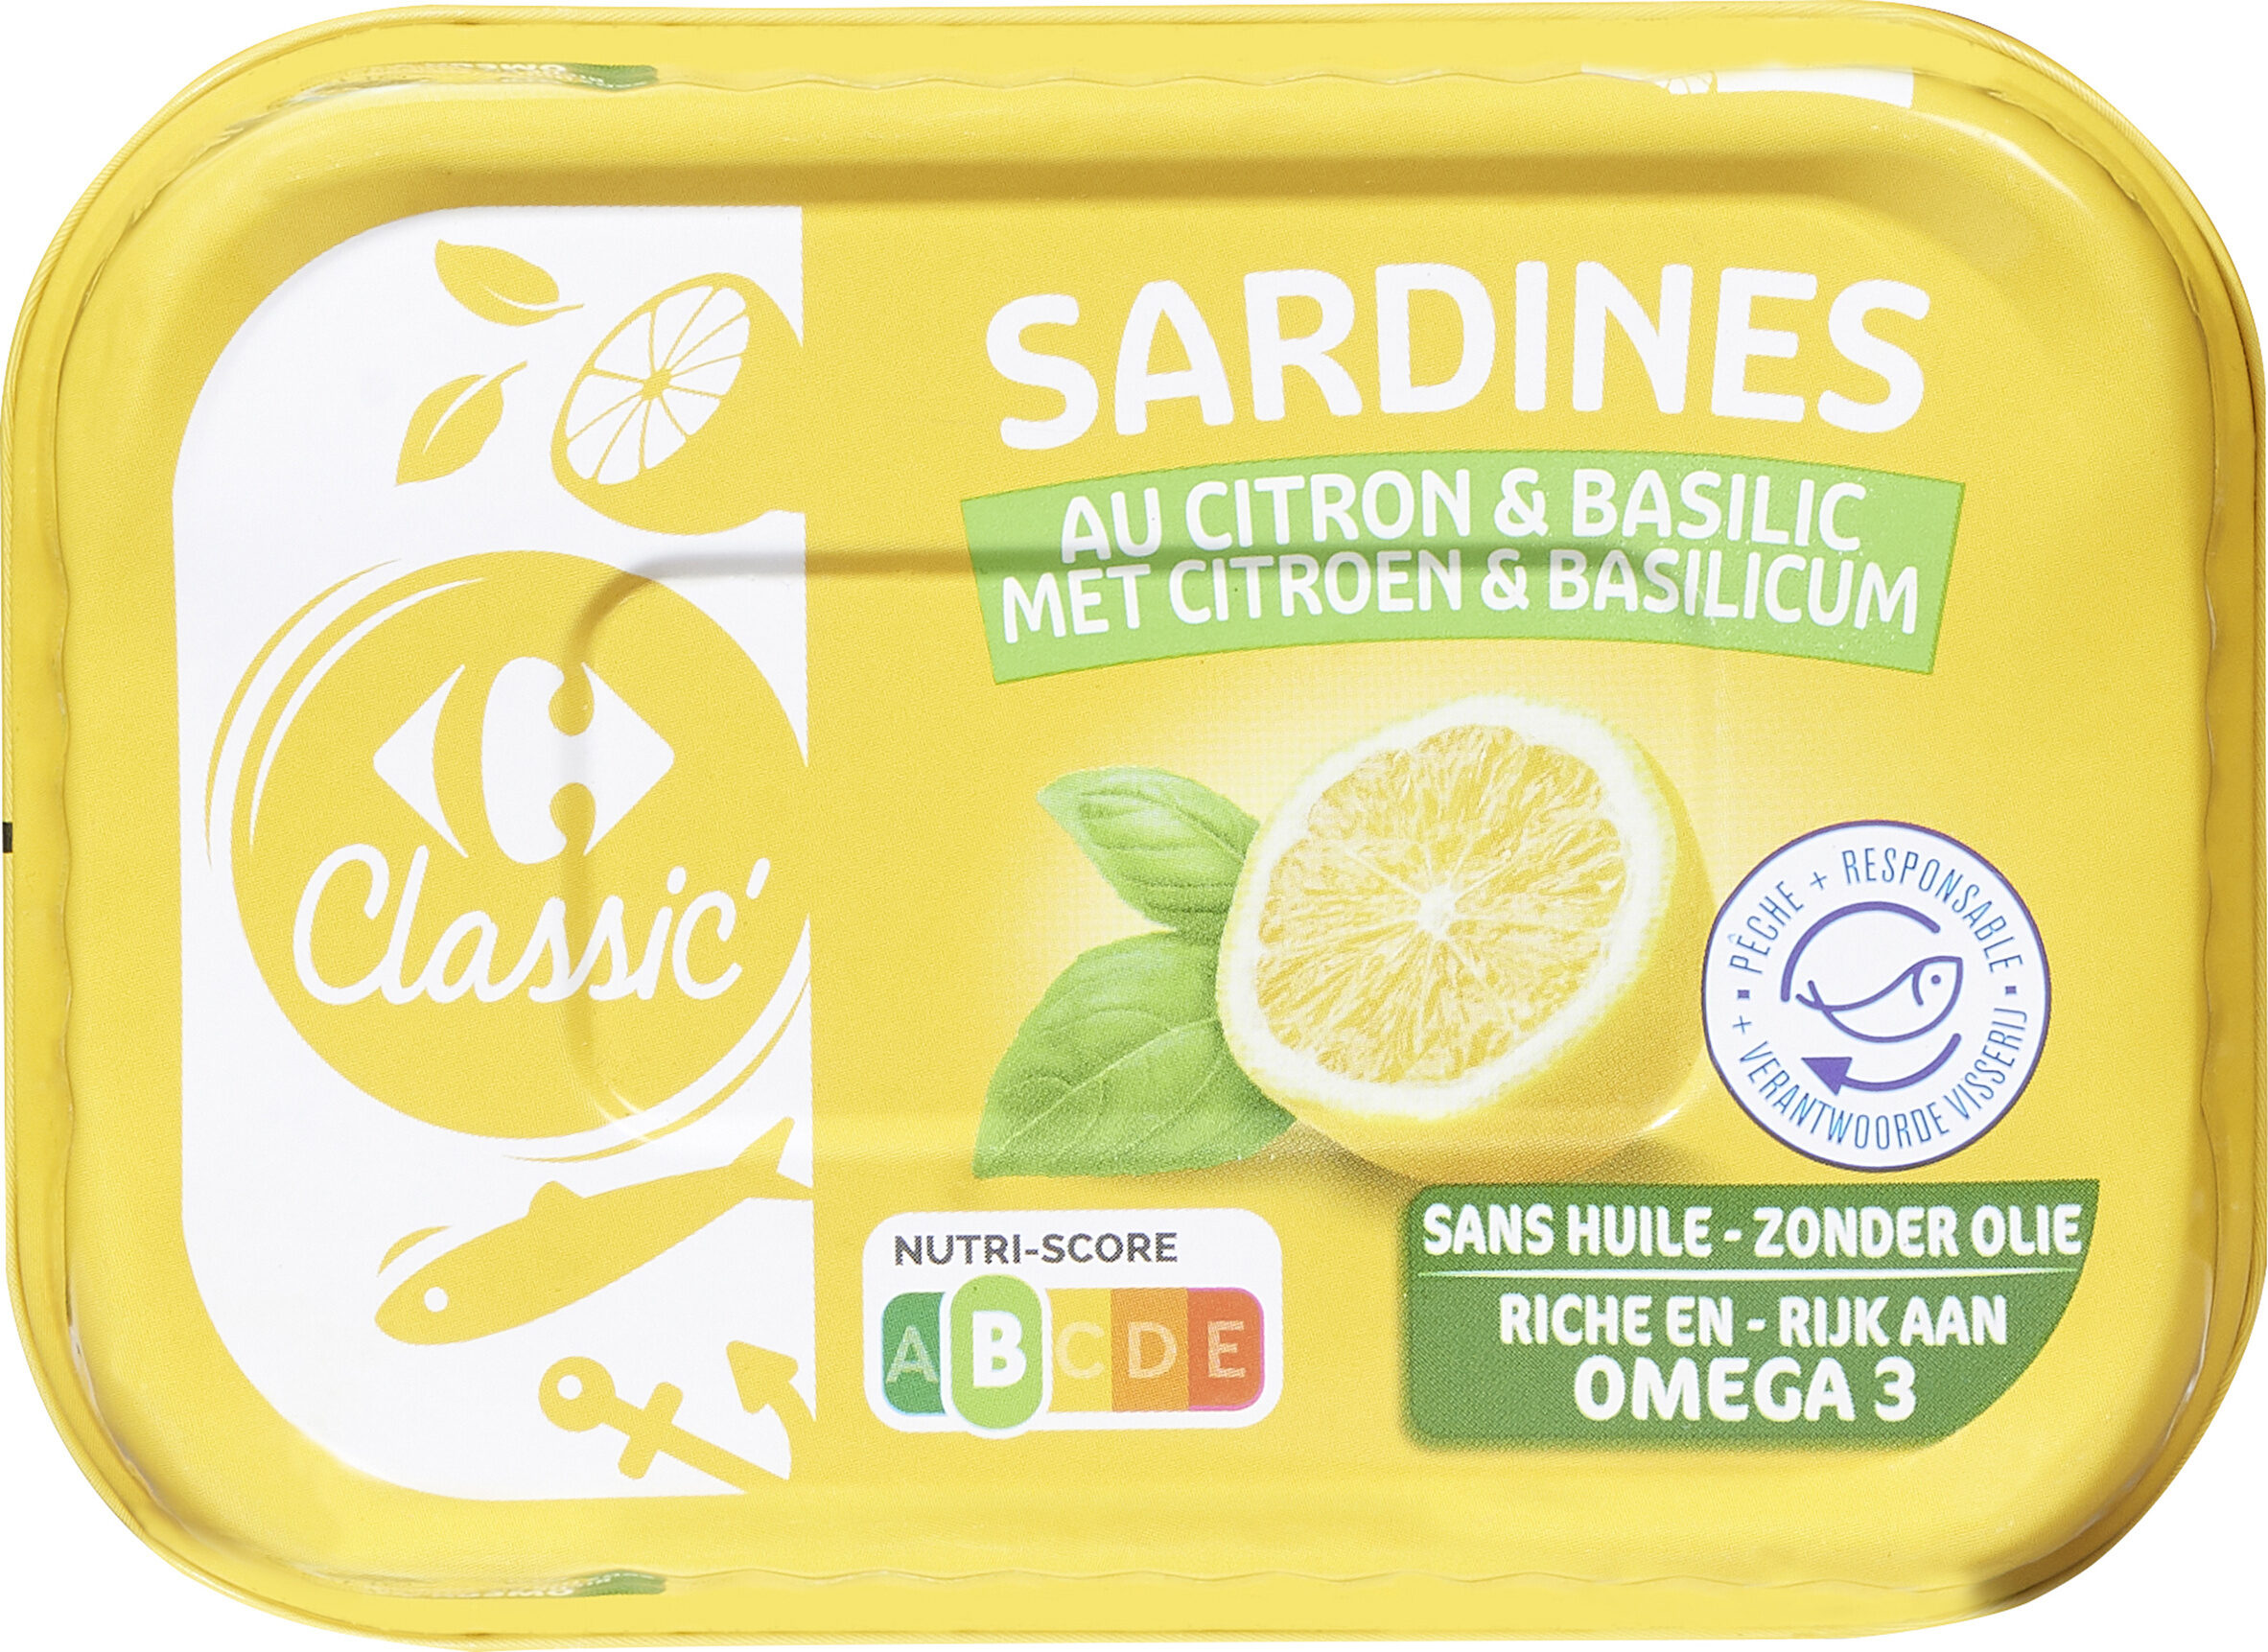 Sardines au citron & basilic - Produit